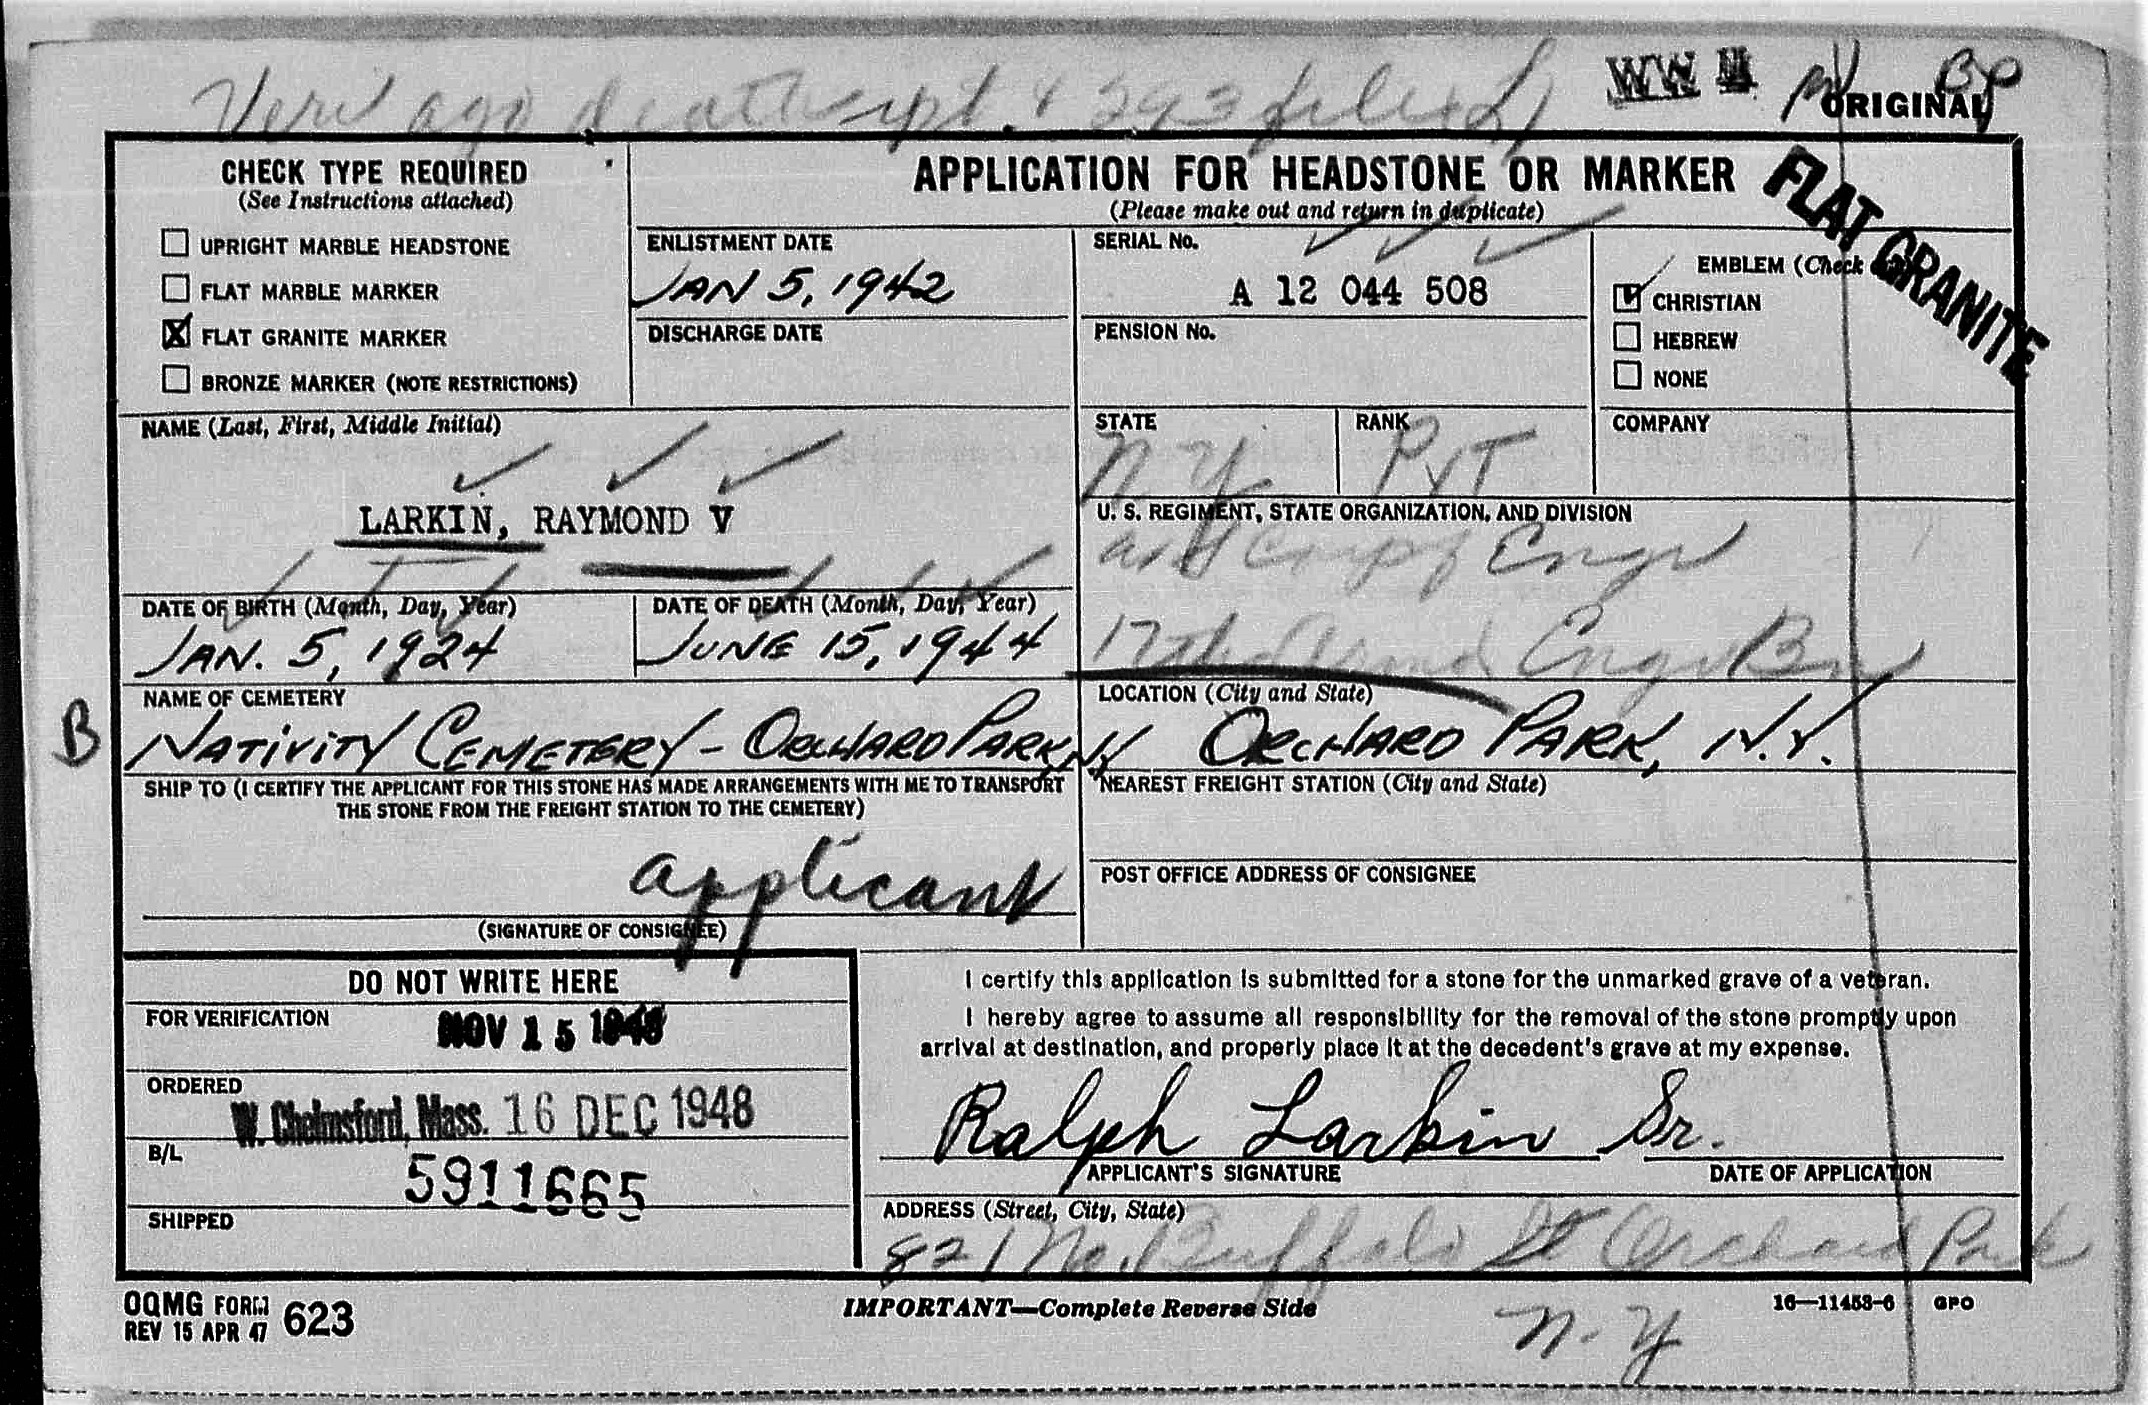 Headstone Application Raymond V. Larkin 6-15-1944 2